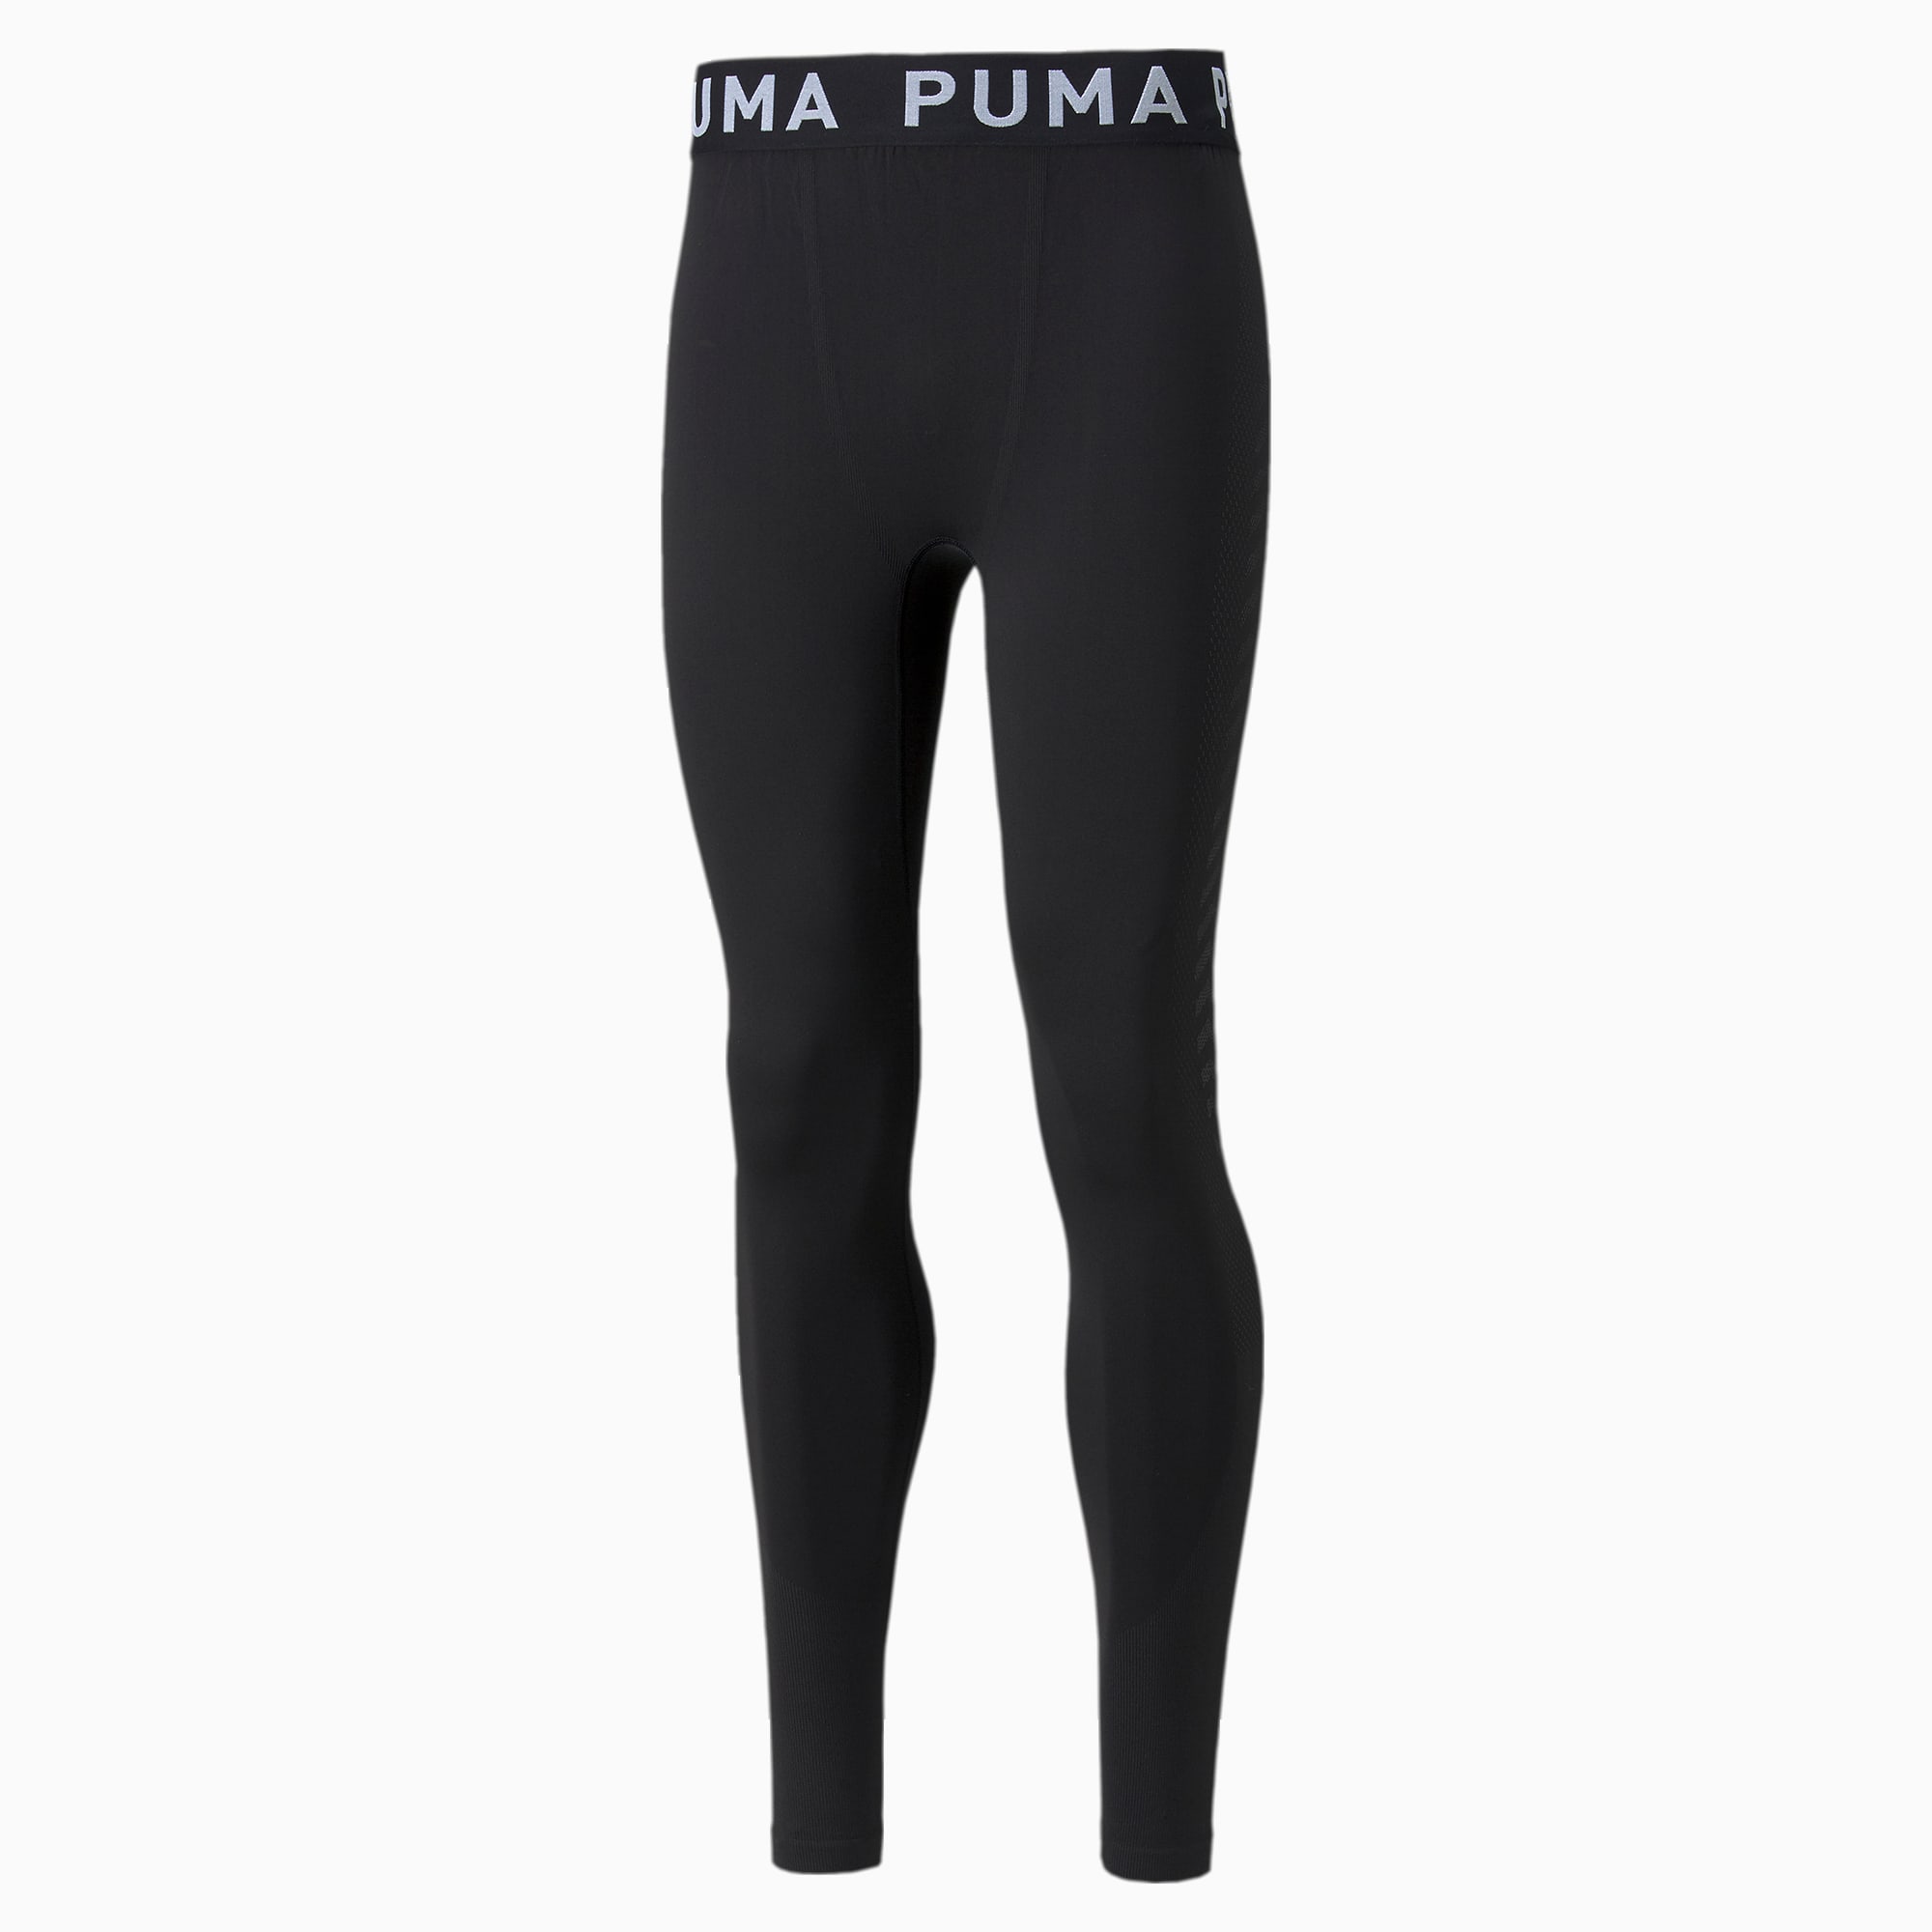 PUMA Formknit Seamless Long Men's Training Tights, Black, Size S, Clothing